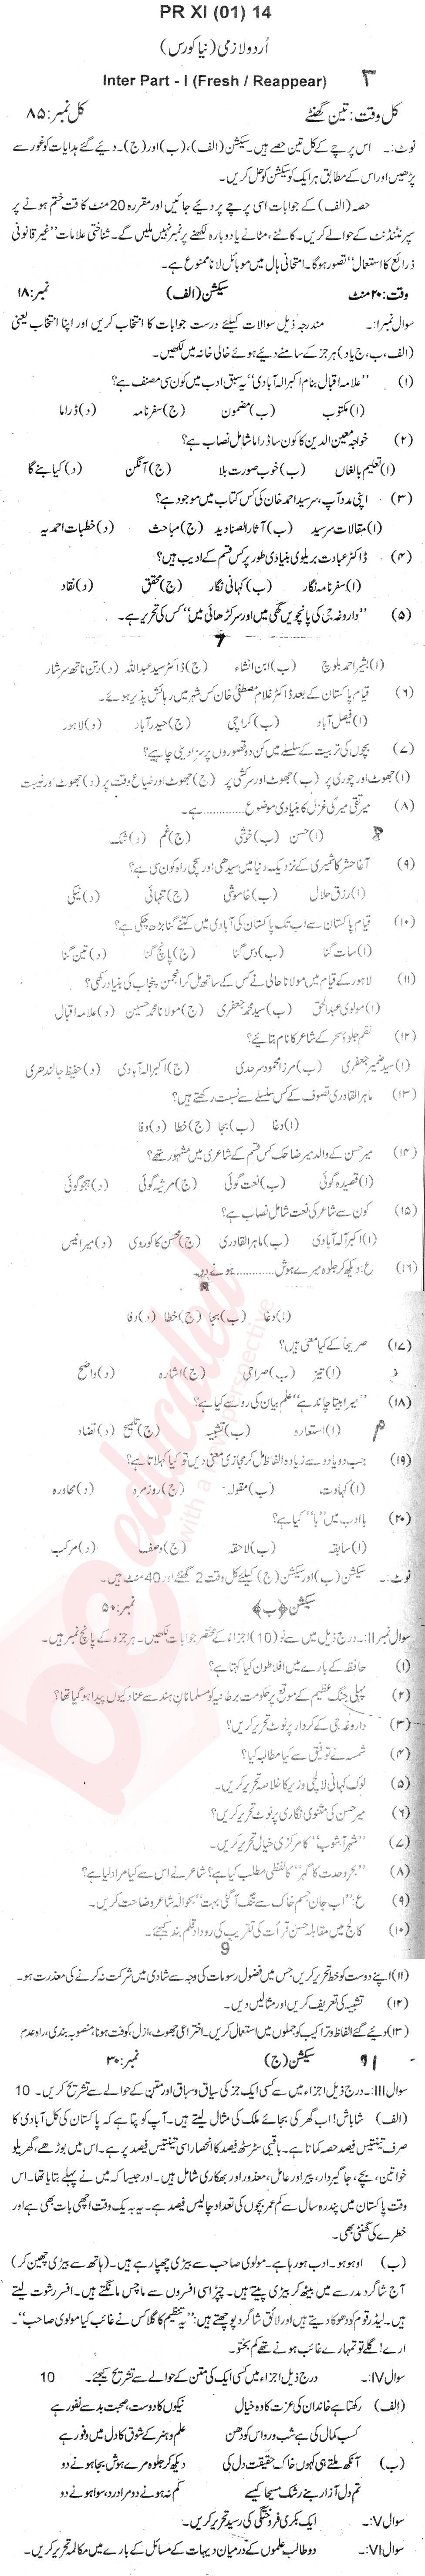 Urdu 11th class Past Paper Group 1 BISE Peshawar 2014